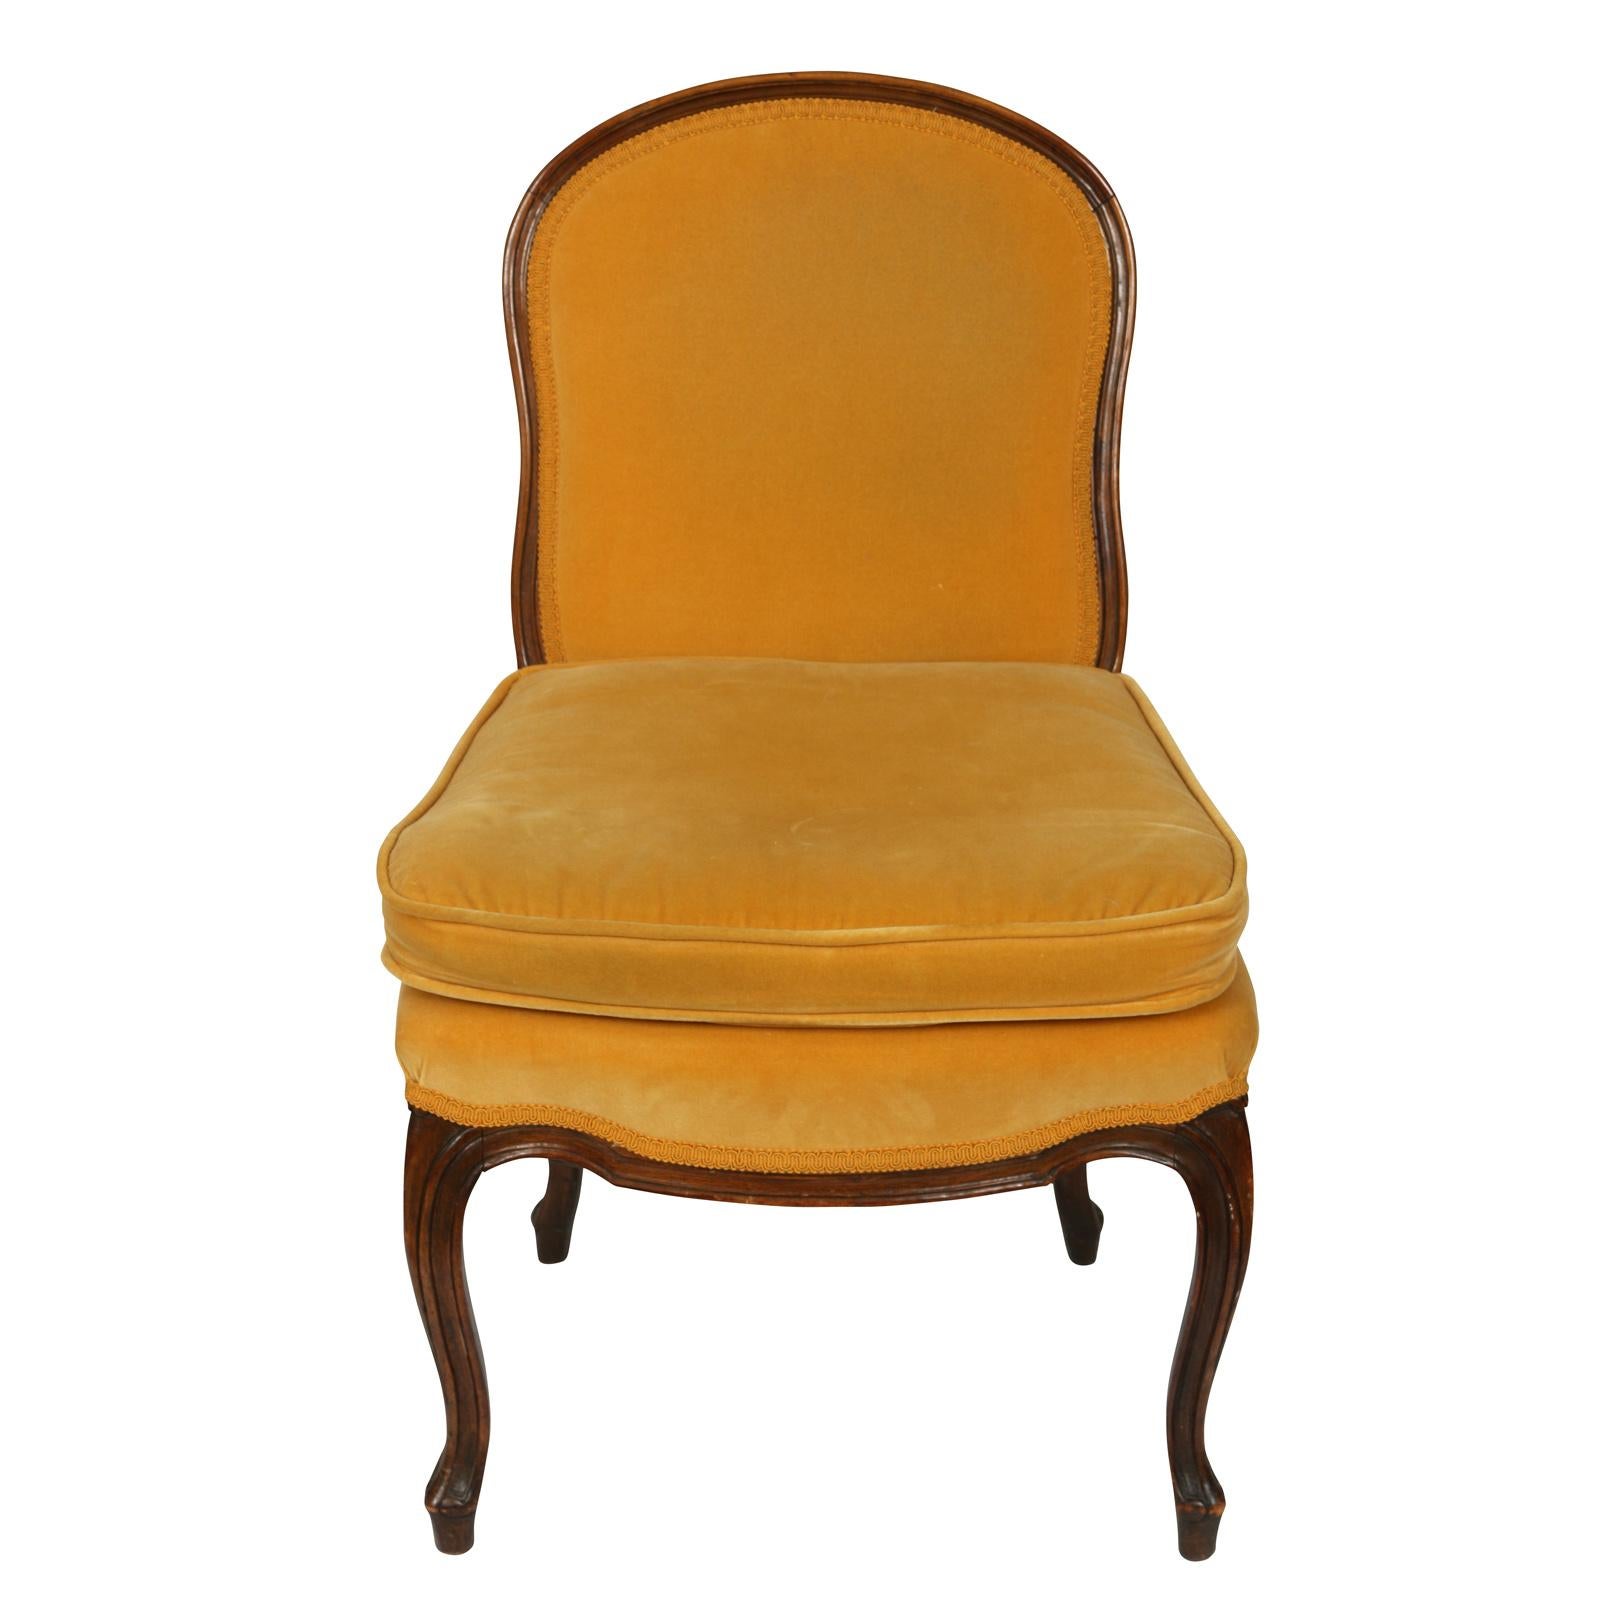 Pair of Louis XV style slipper chairs upholstered in ochre velvet with dark wood frame and legs.